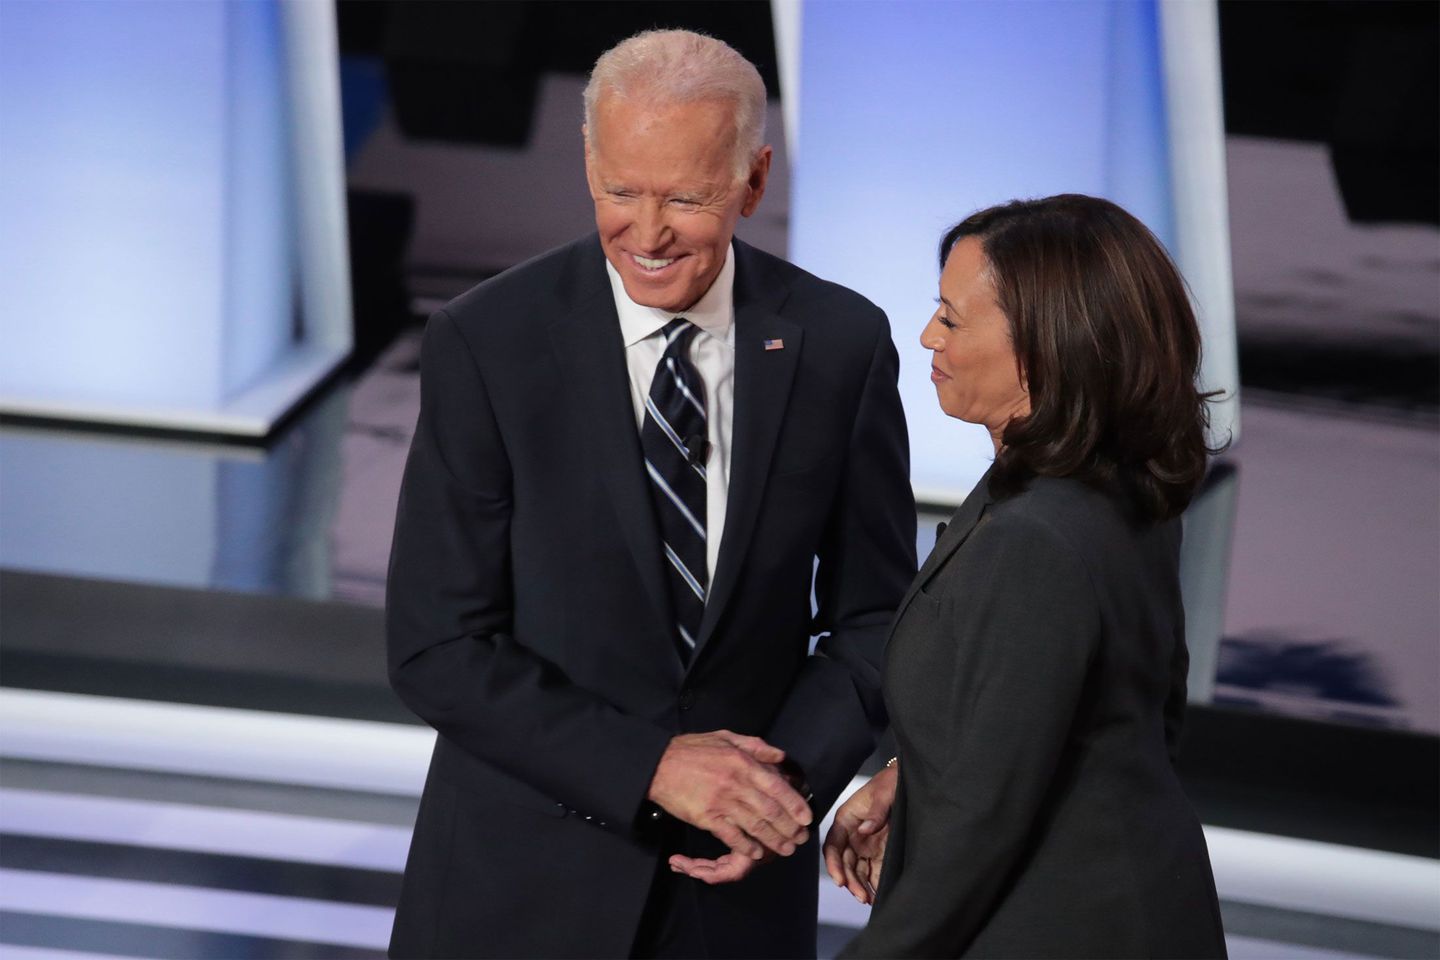 Kamala Harris poses pitfalls to Biden as potential VP pick Boston Globe